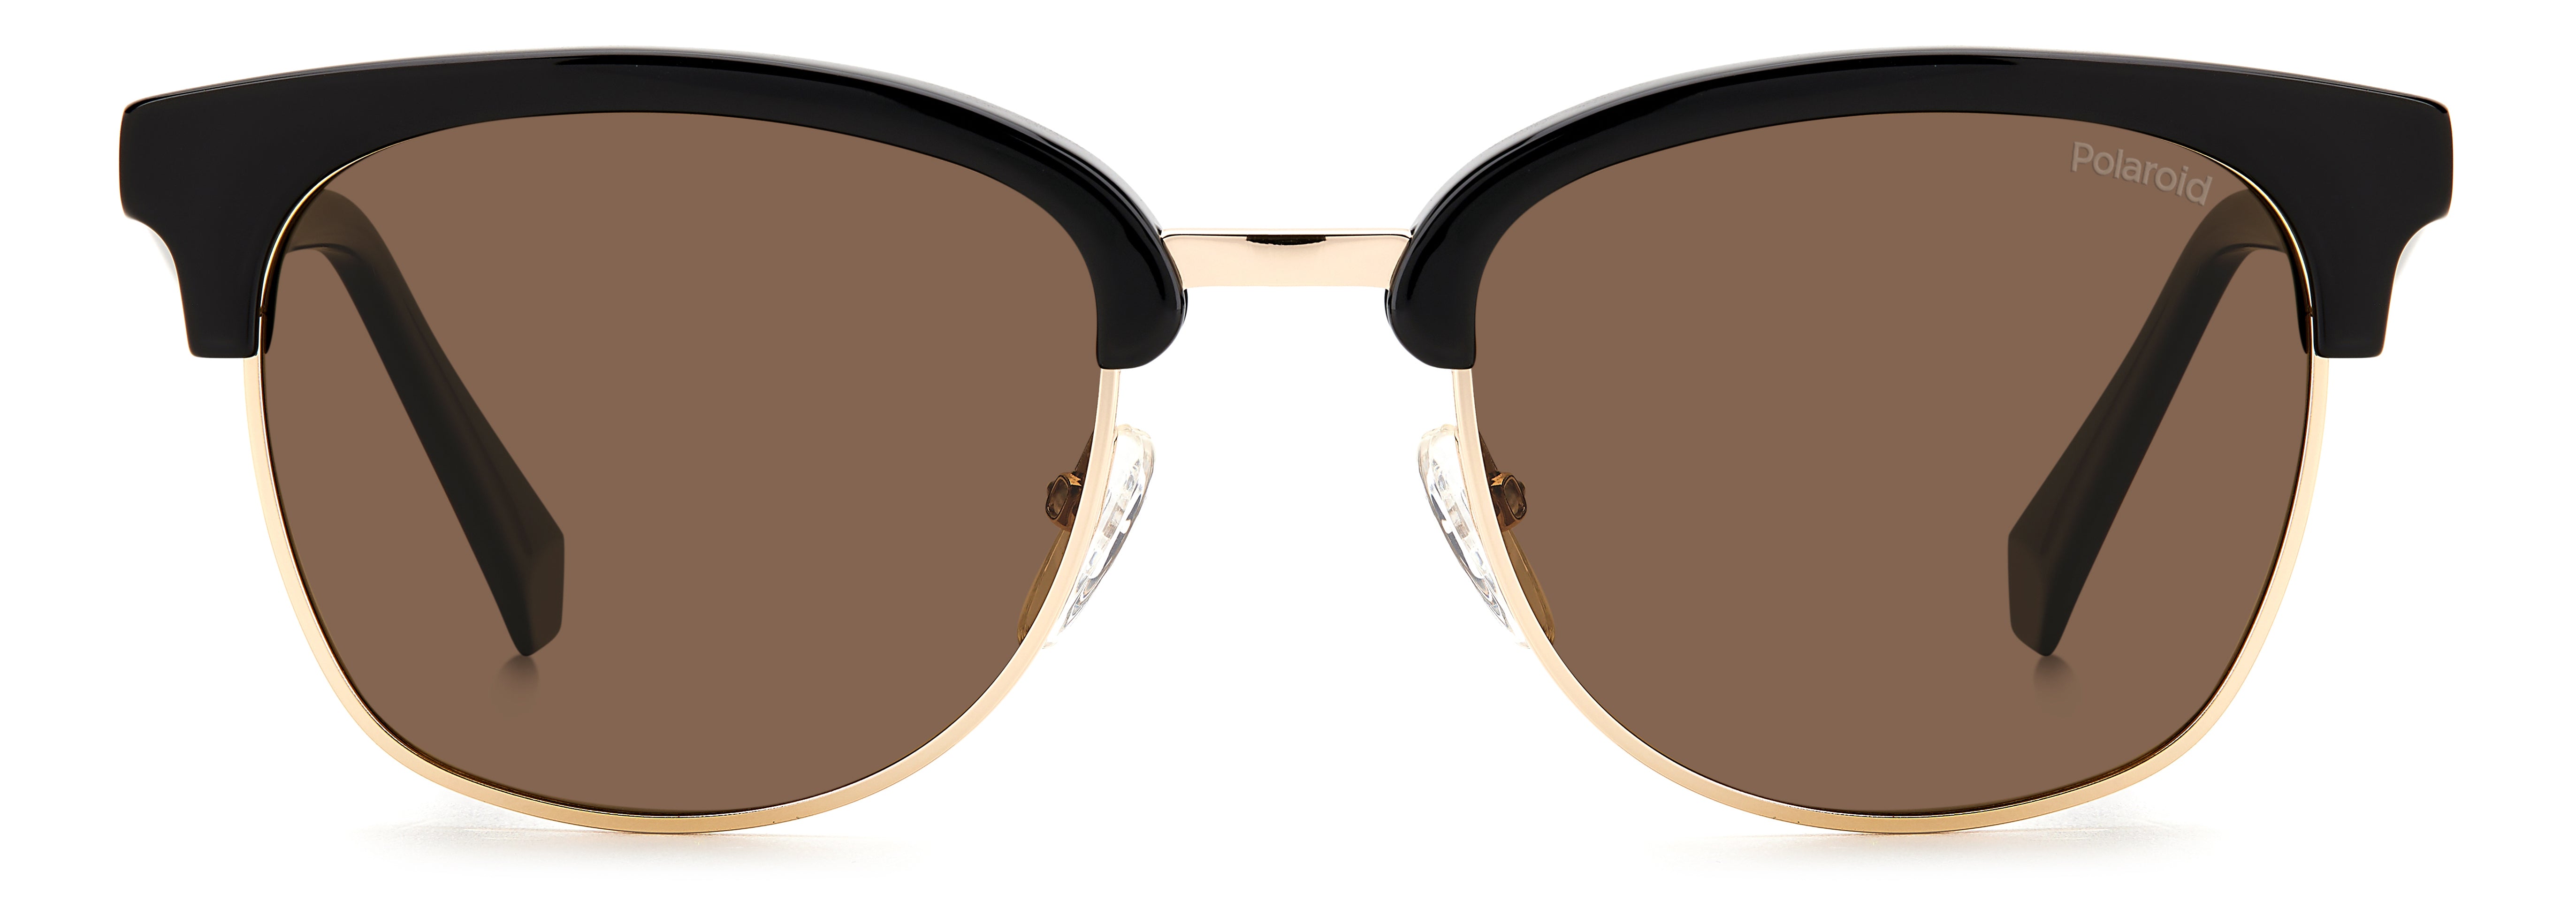 Polaroid Modern Clubmaster Sunglasses